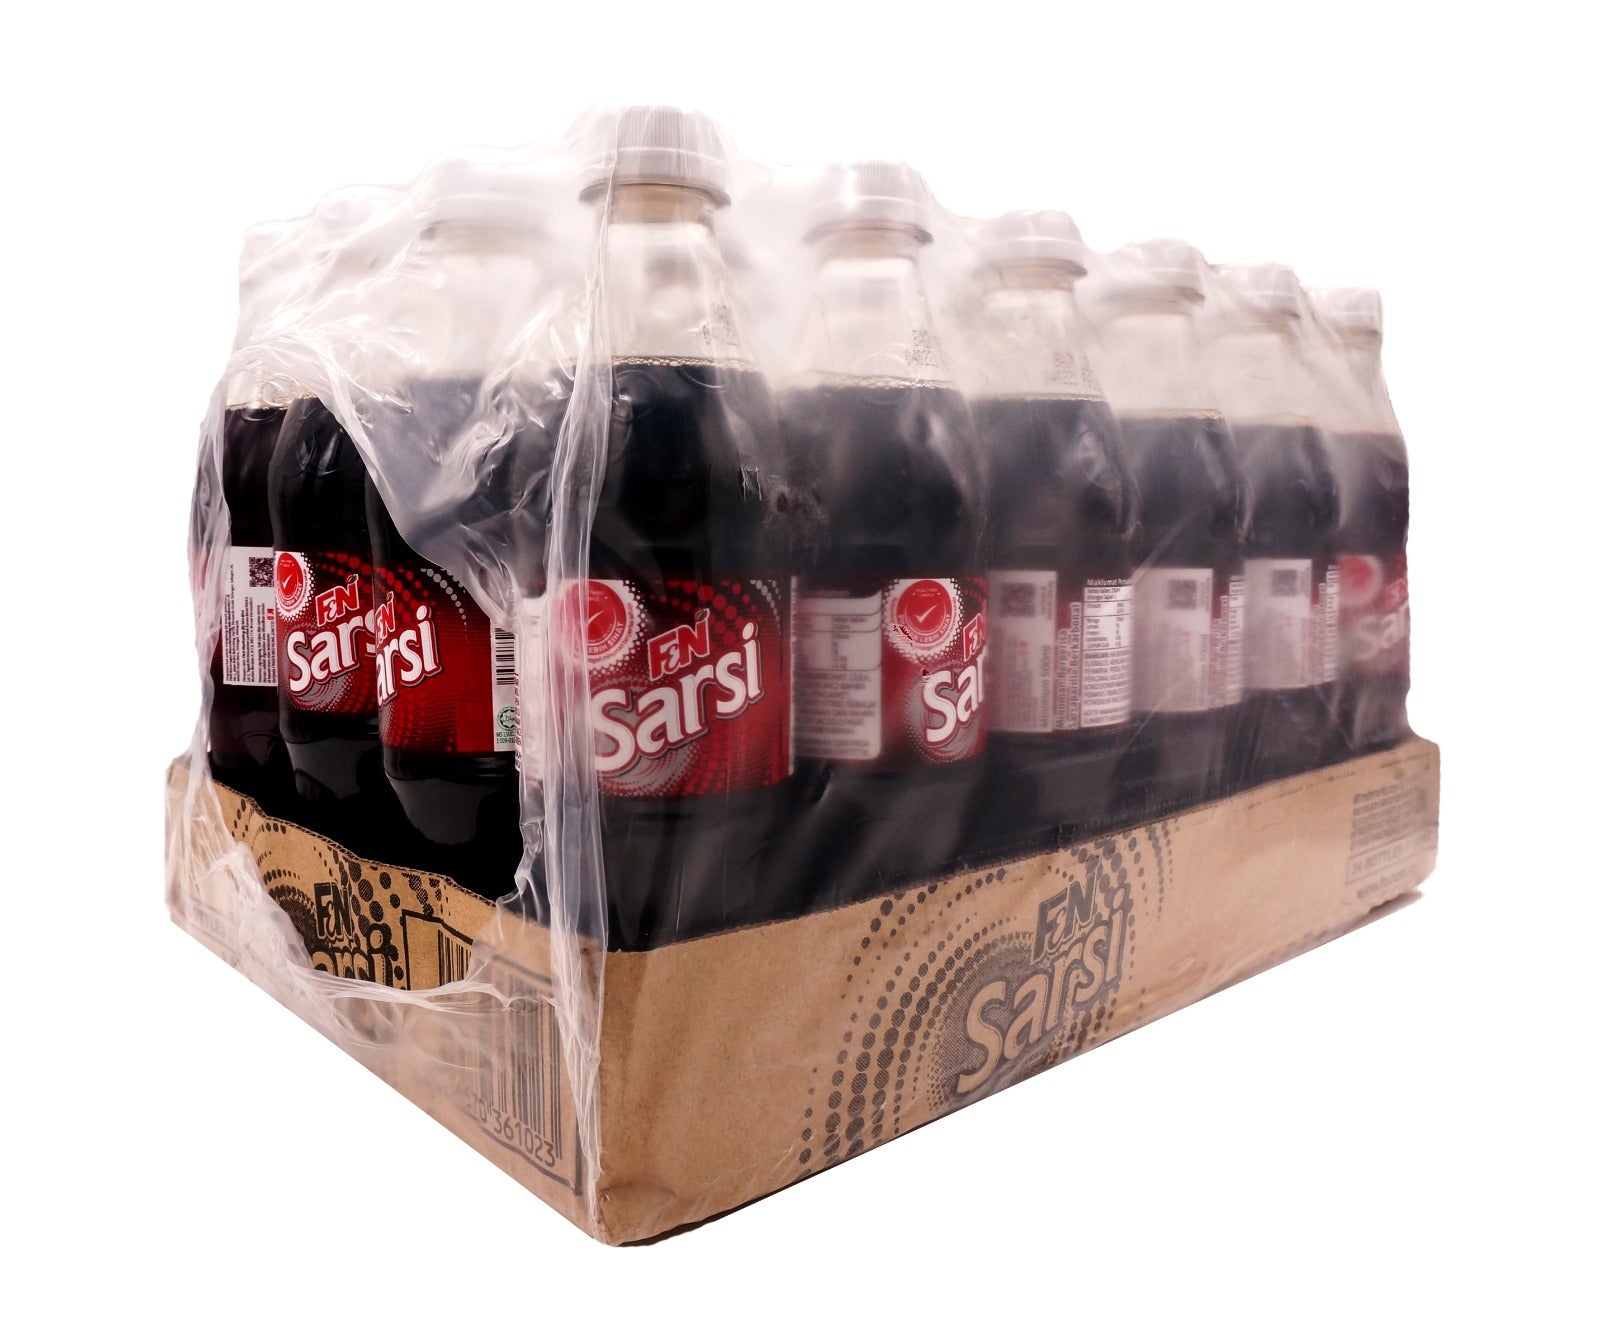 F&N Sarsi Bottle (24 x 500ml – Carton)